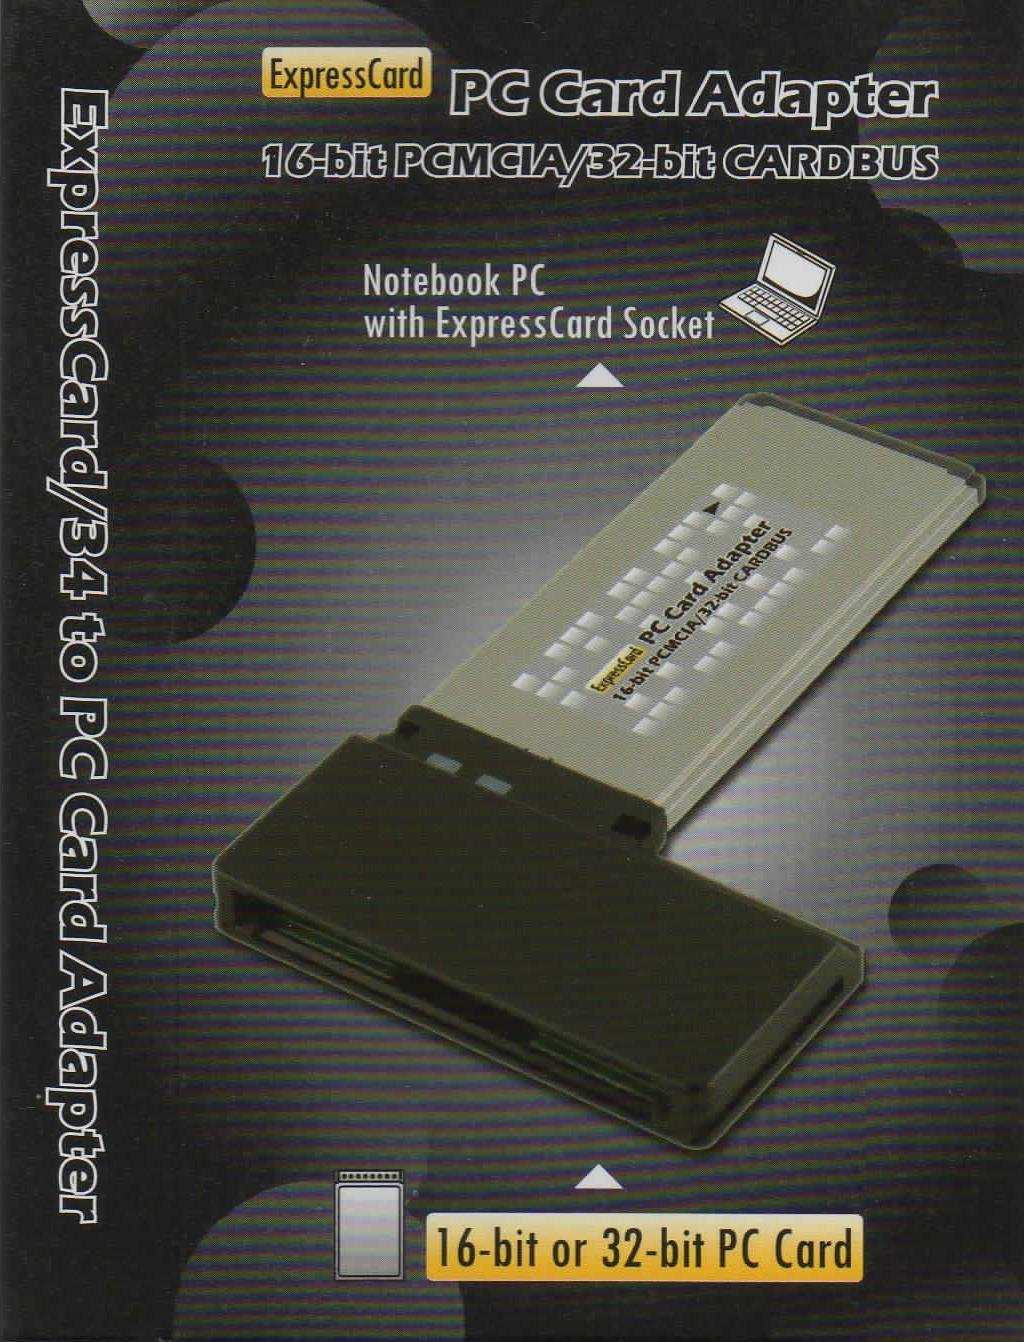 Digigear 16bit / 32 bit CardBus PCMCIA PC Card to 34 mm ExpressCard Adapter/Reader/Writer (For WIN VISTA & 7, NOT for Mac or Win XP) Support Panasonic P2 /3G/ATA/aircard/wireless LAN/modem cards